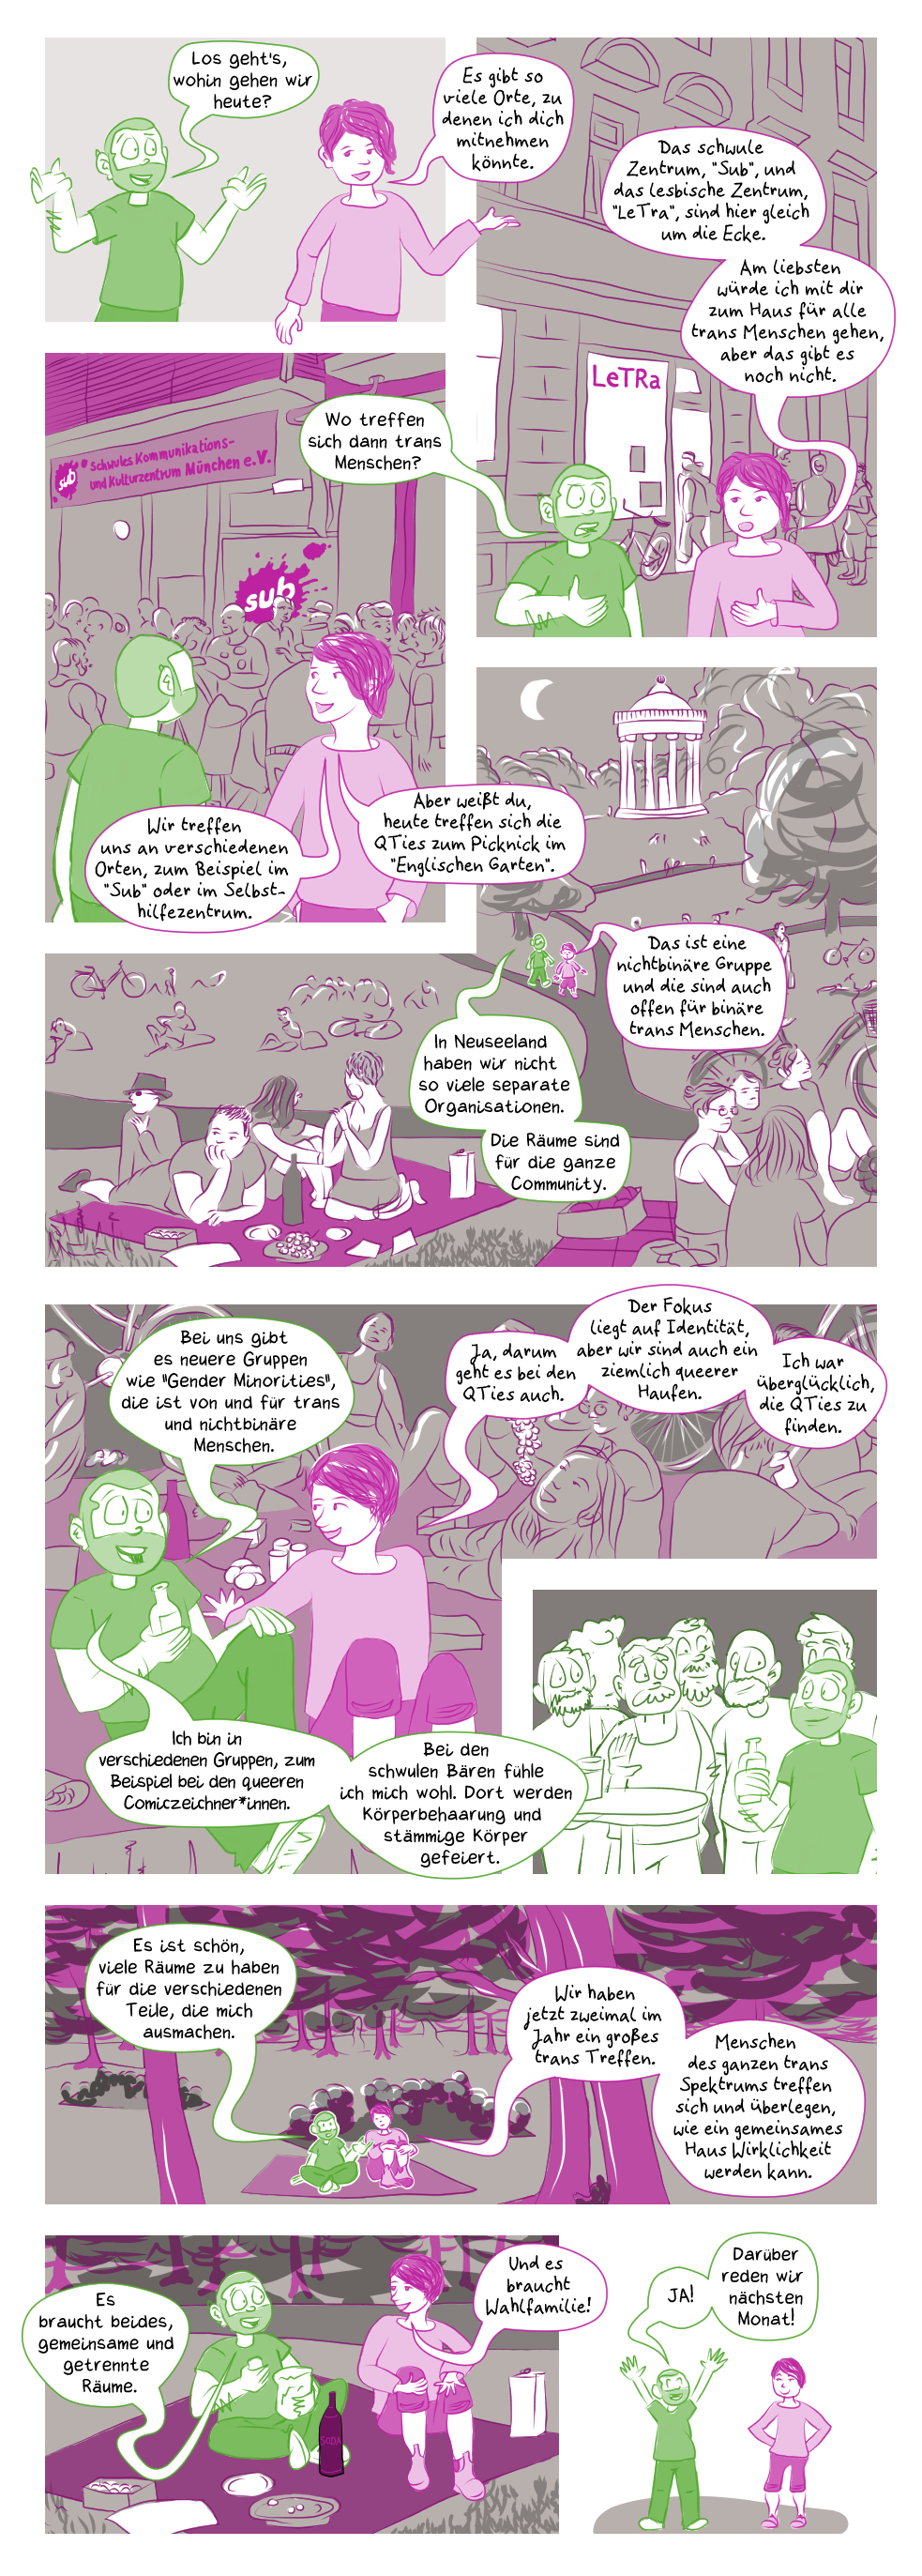 visuelles Comic: Queere Comic Konversation: September - Räume, rein text-basiertes Comic folgt nach den Anmerkungen